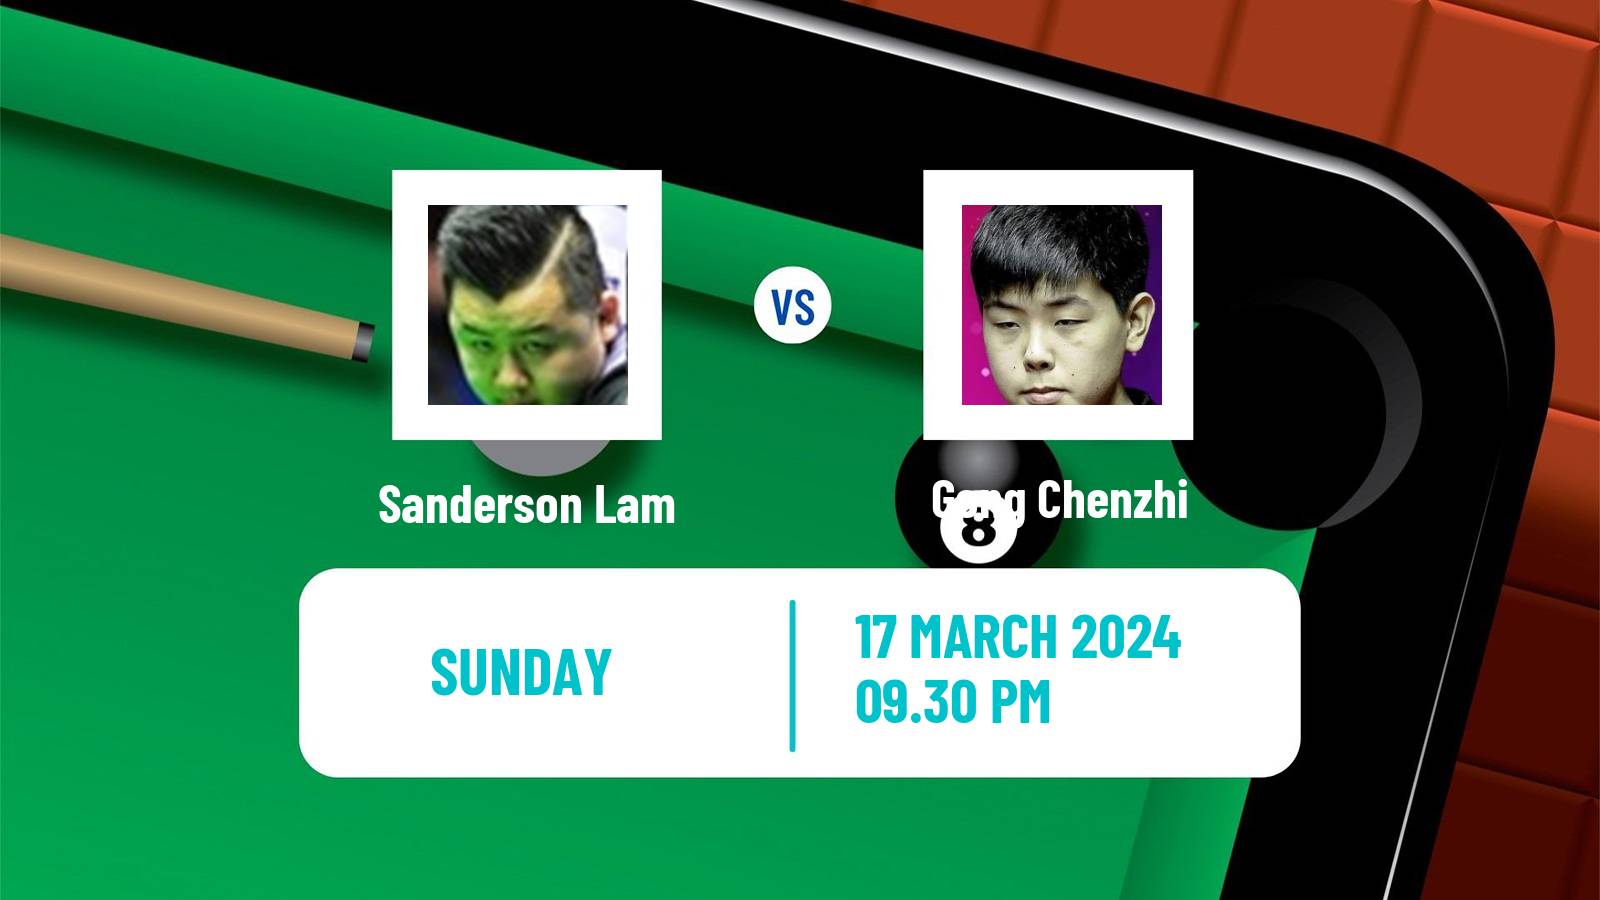 Snooker World Open Sanderson Lam - Gong Chenzhi